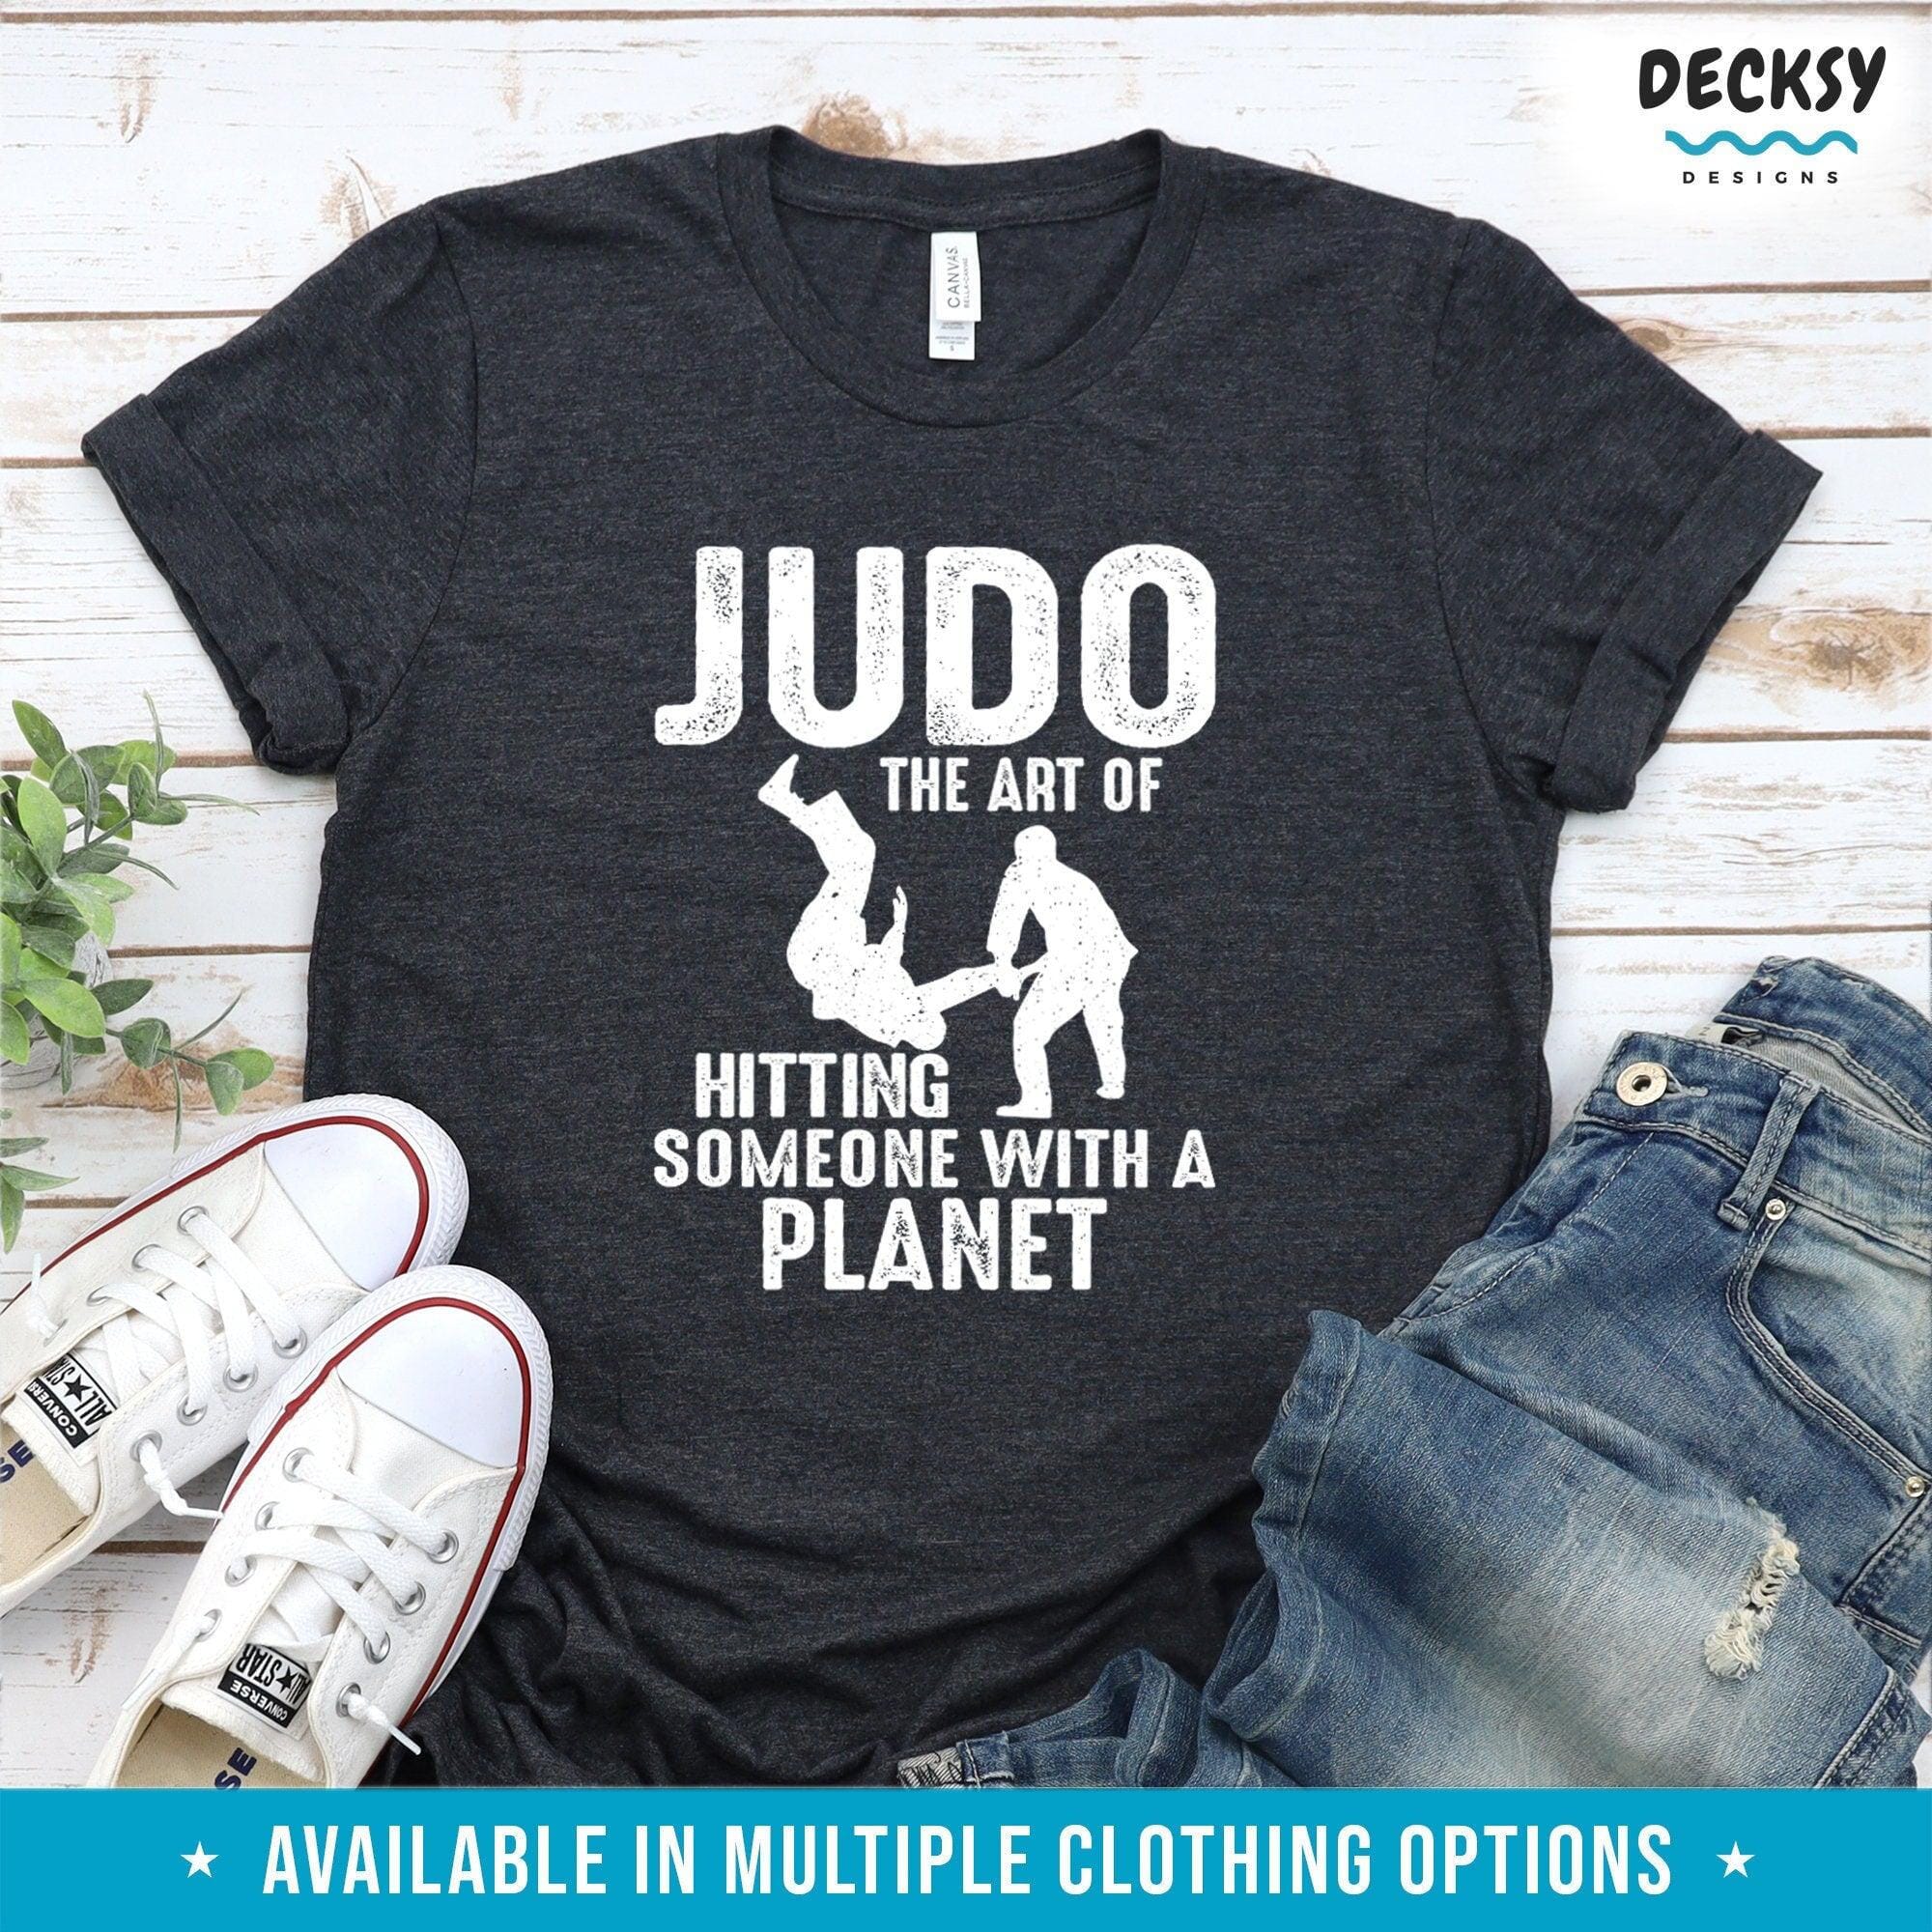 Judo TShirt, Martial Arts Gift-Clothing:Gender-Neutral Adult Clothing:Tops & Tees:T-shirts:Graphic Tees-DecksyDesigns